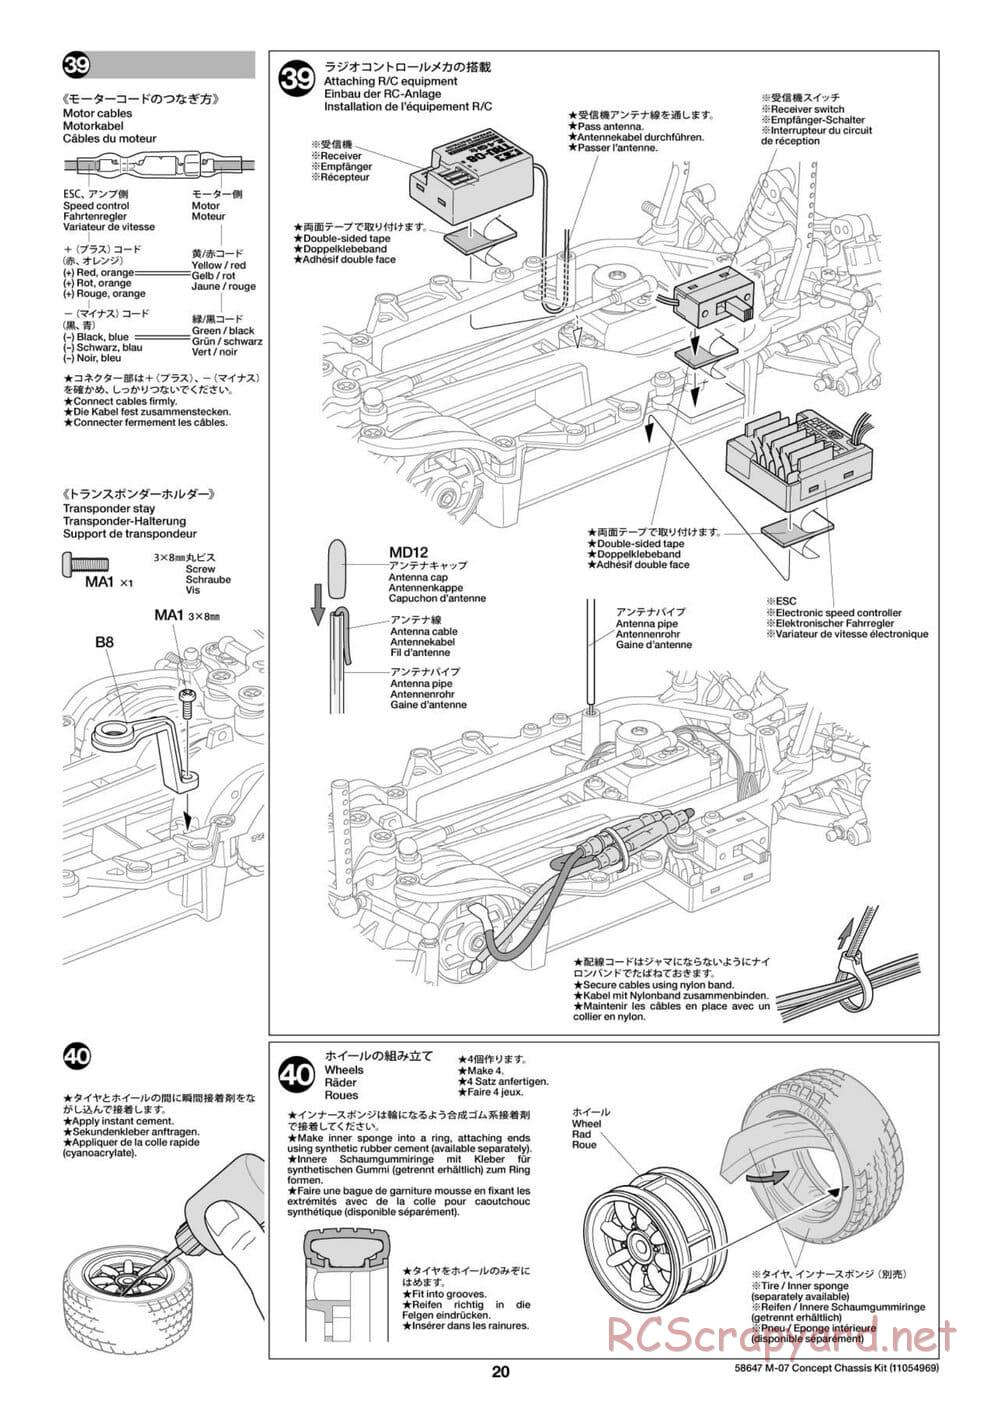 Tamiya - M-07 Concept Chassis - Manual - Page 20